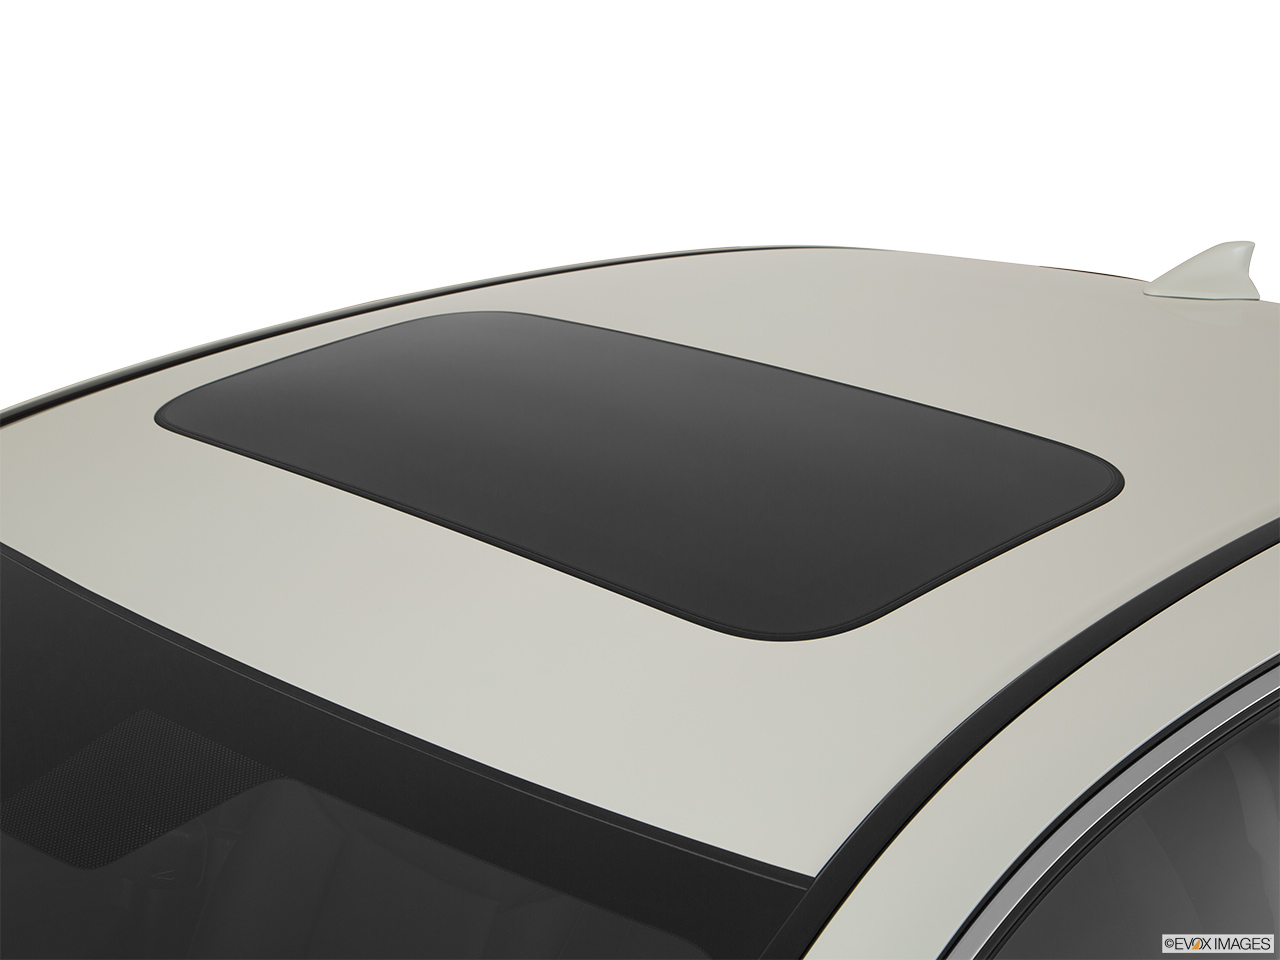 2017 Acura TLX 2.4 8-DCP P-AWS Sunroof/moonroof. 